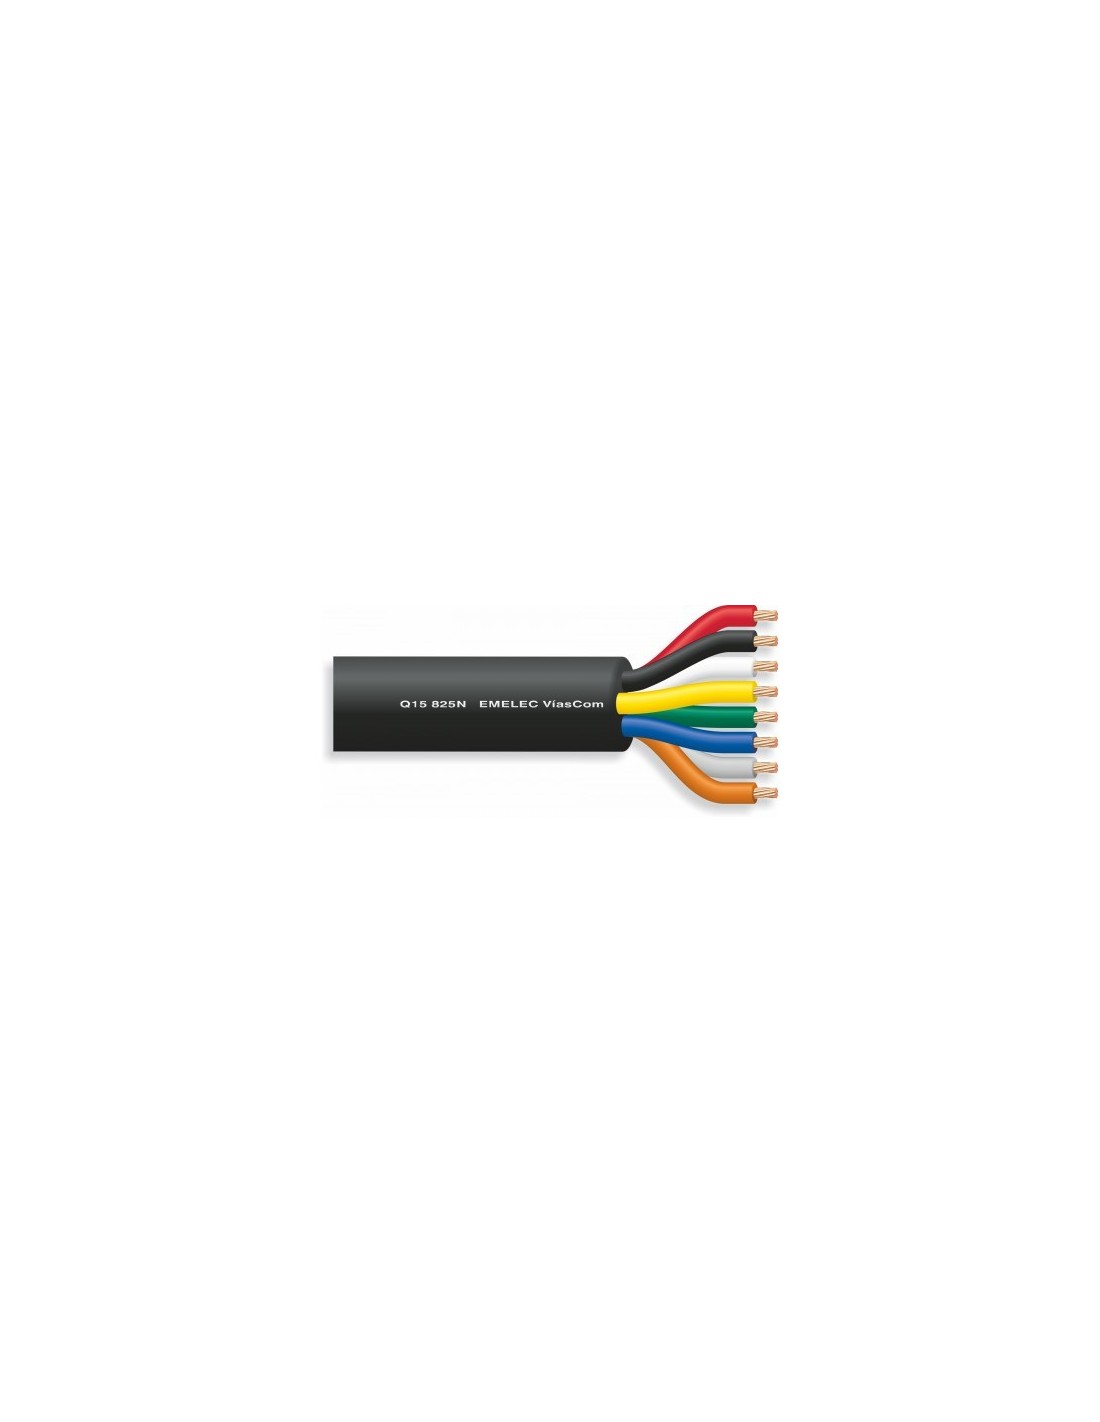 Cable Altavoz Manguera Multivías PVC Extra Flexible - Emelec Viascom